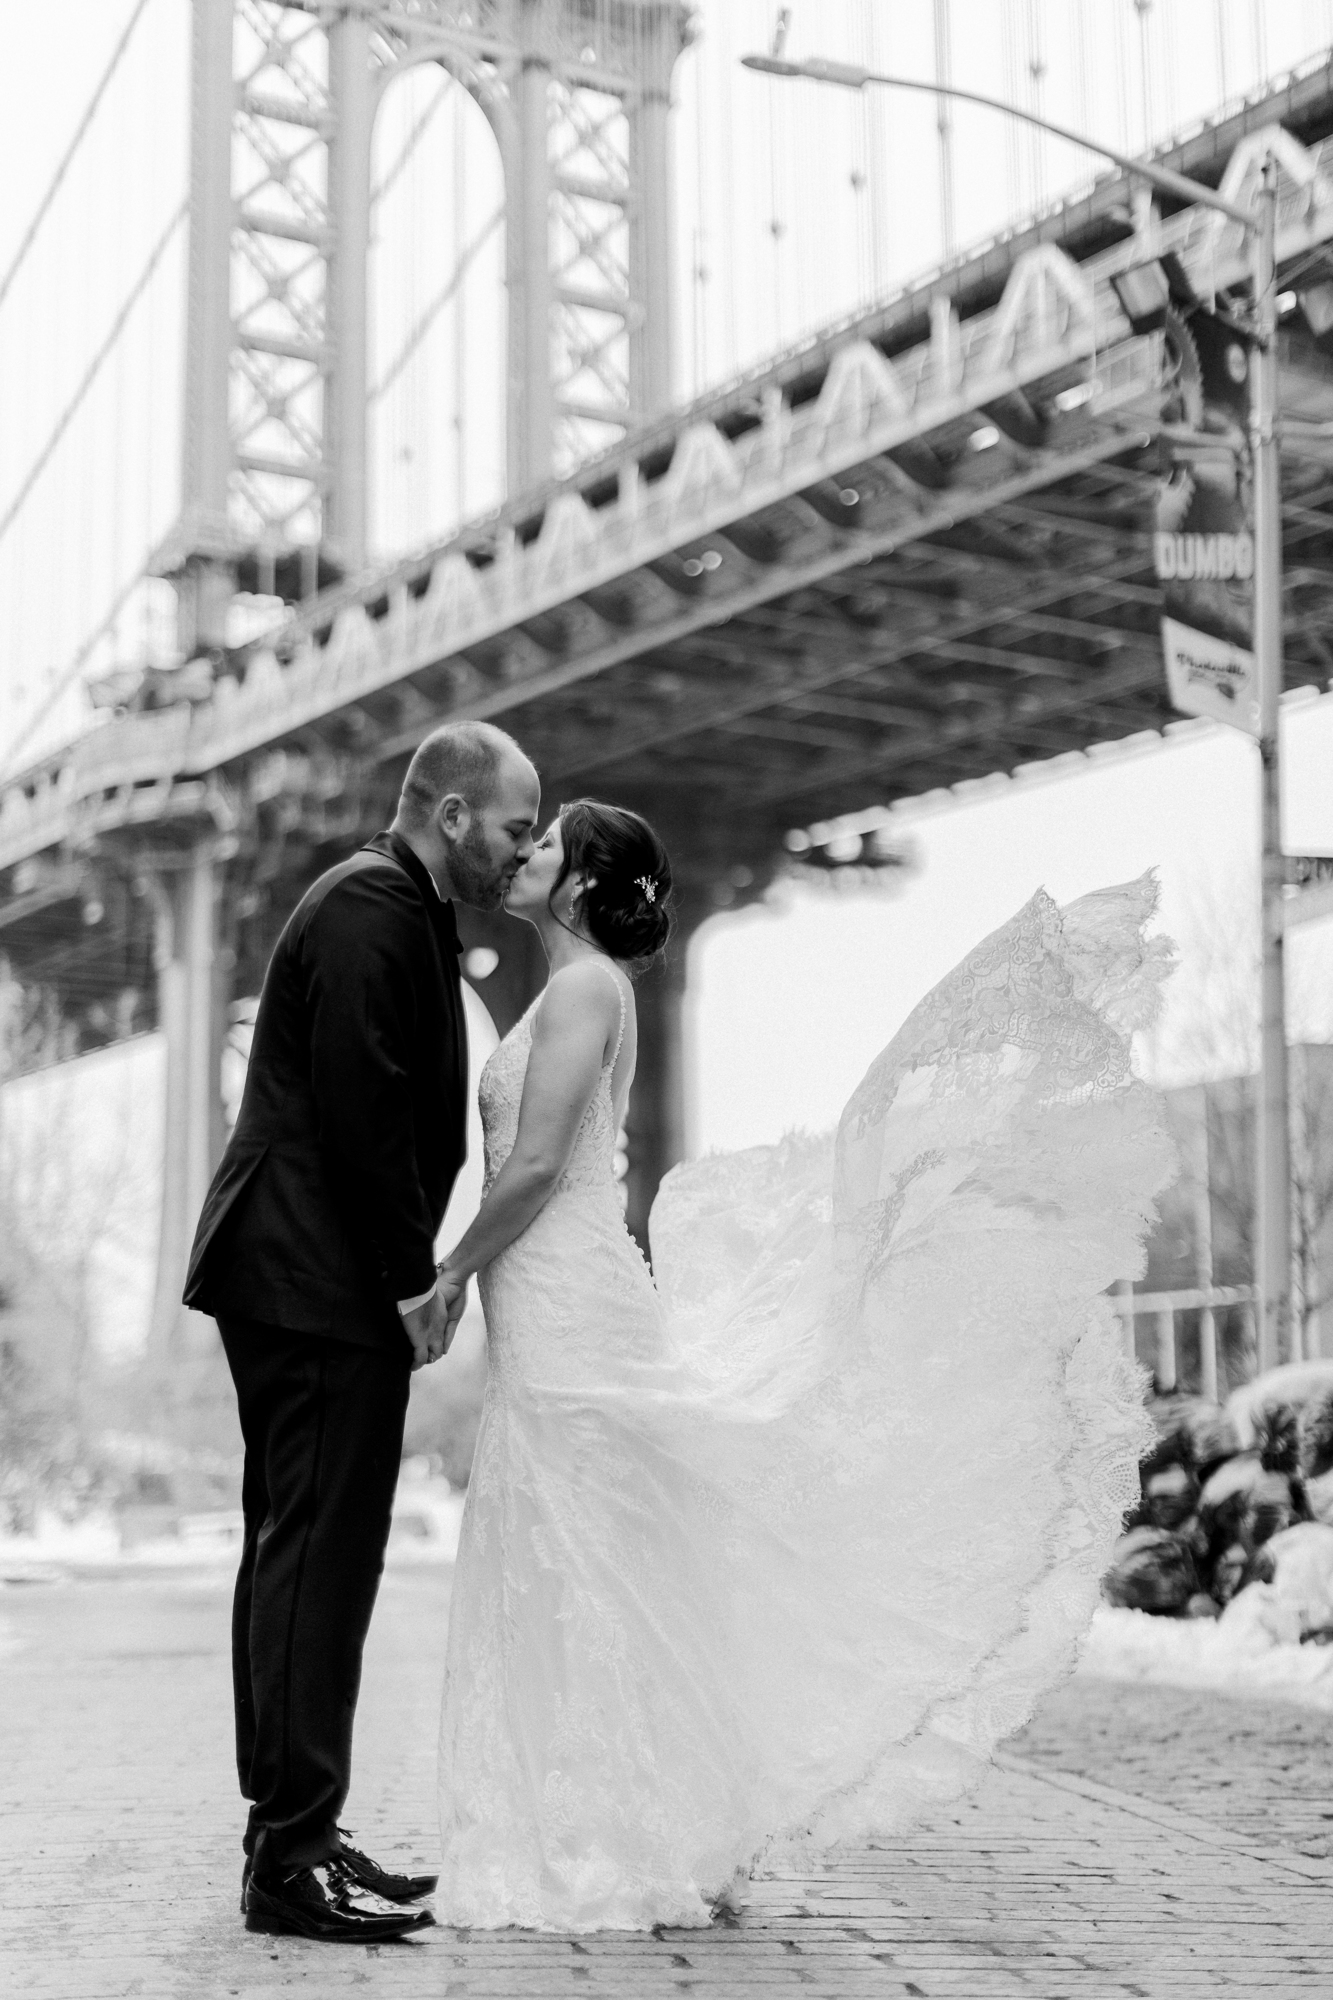 Iconic Dumbo wedding photos from winter wedding